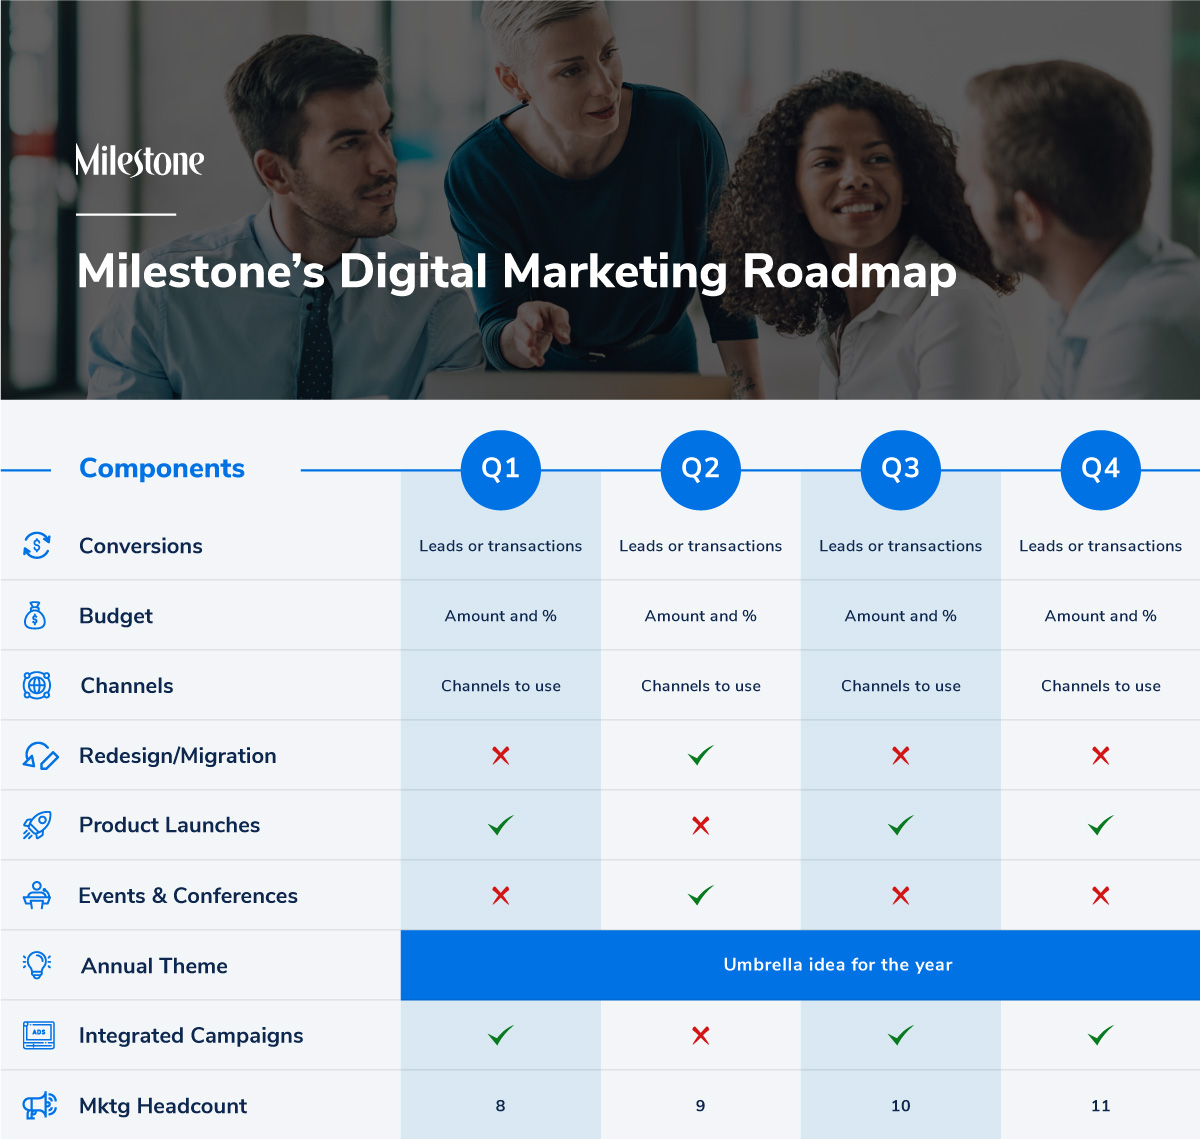 Digital marketing roadmap to success in 2020